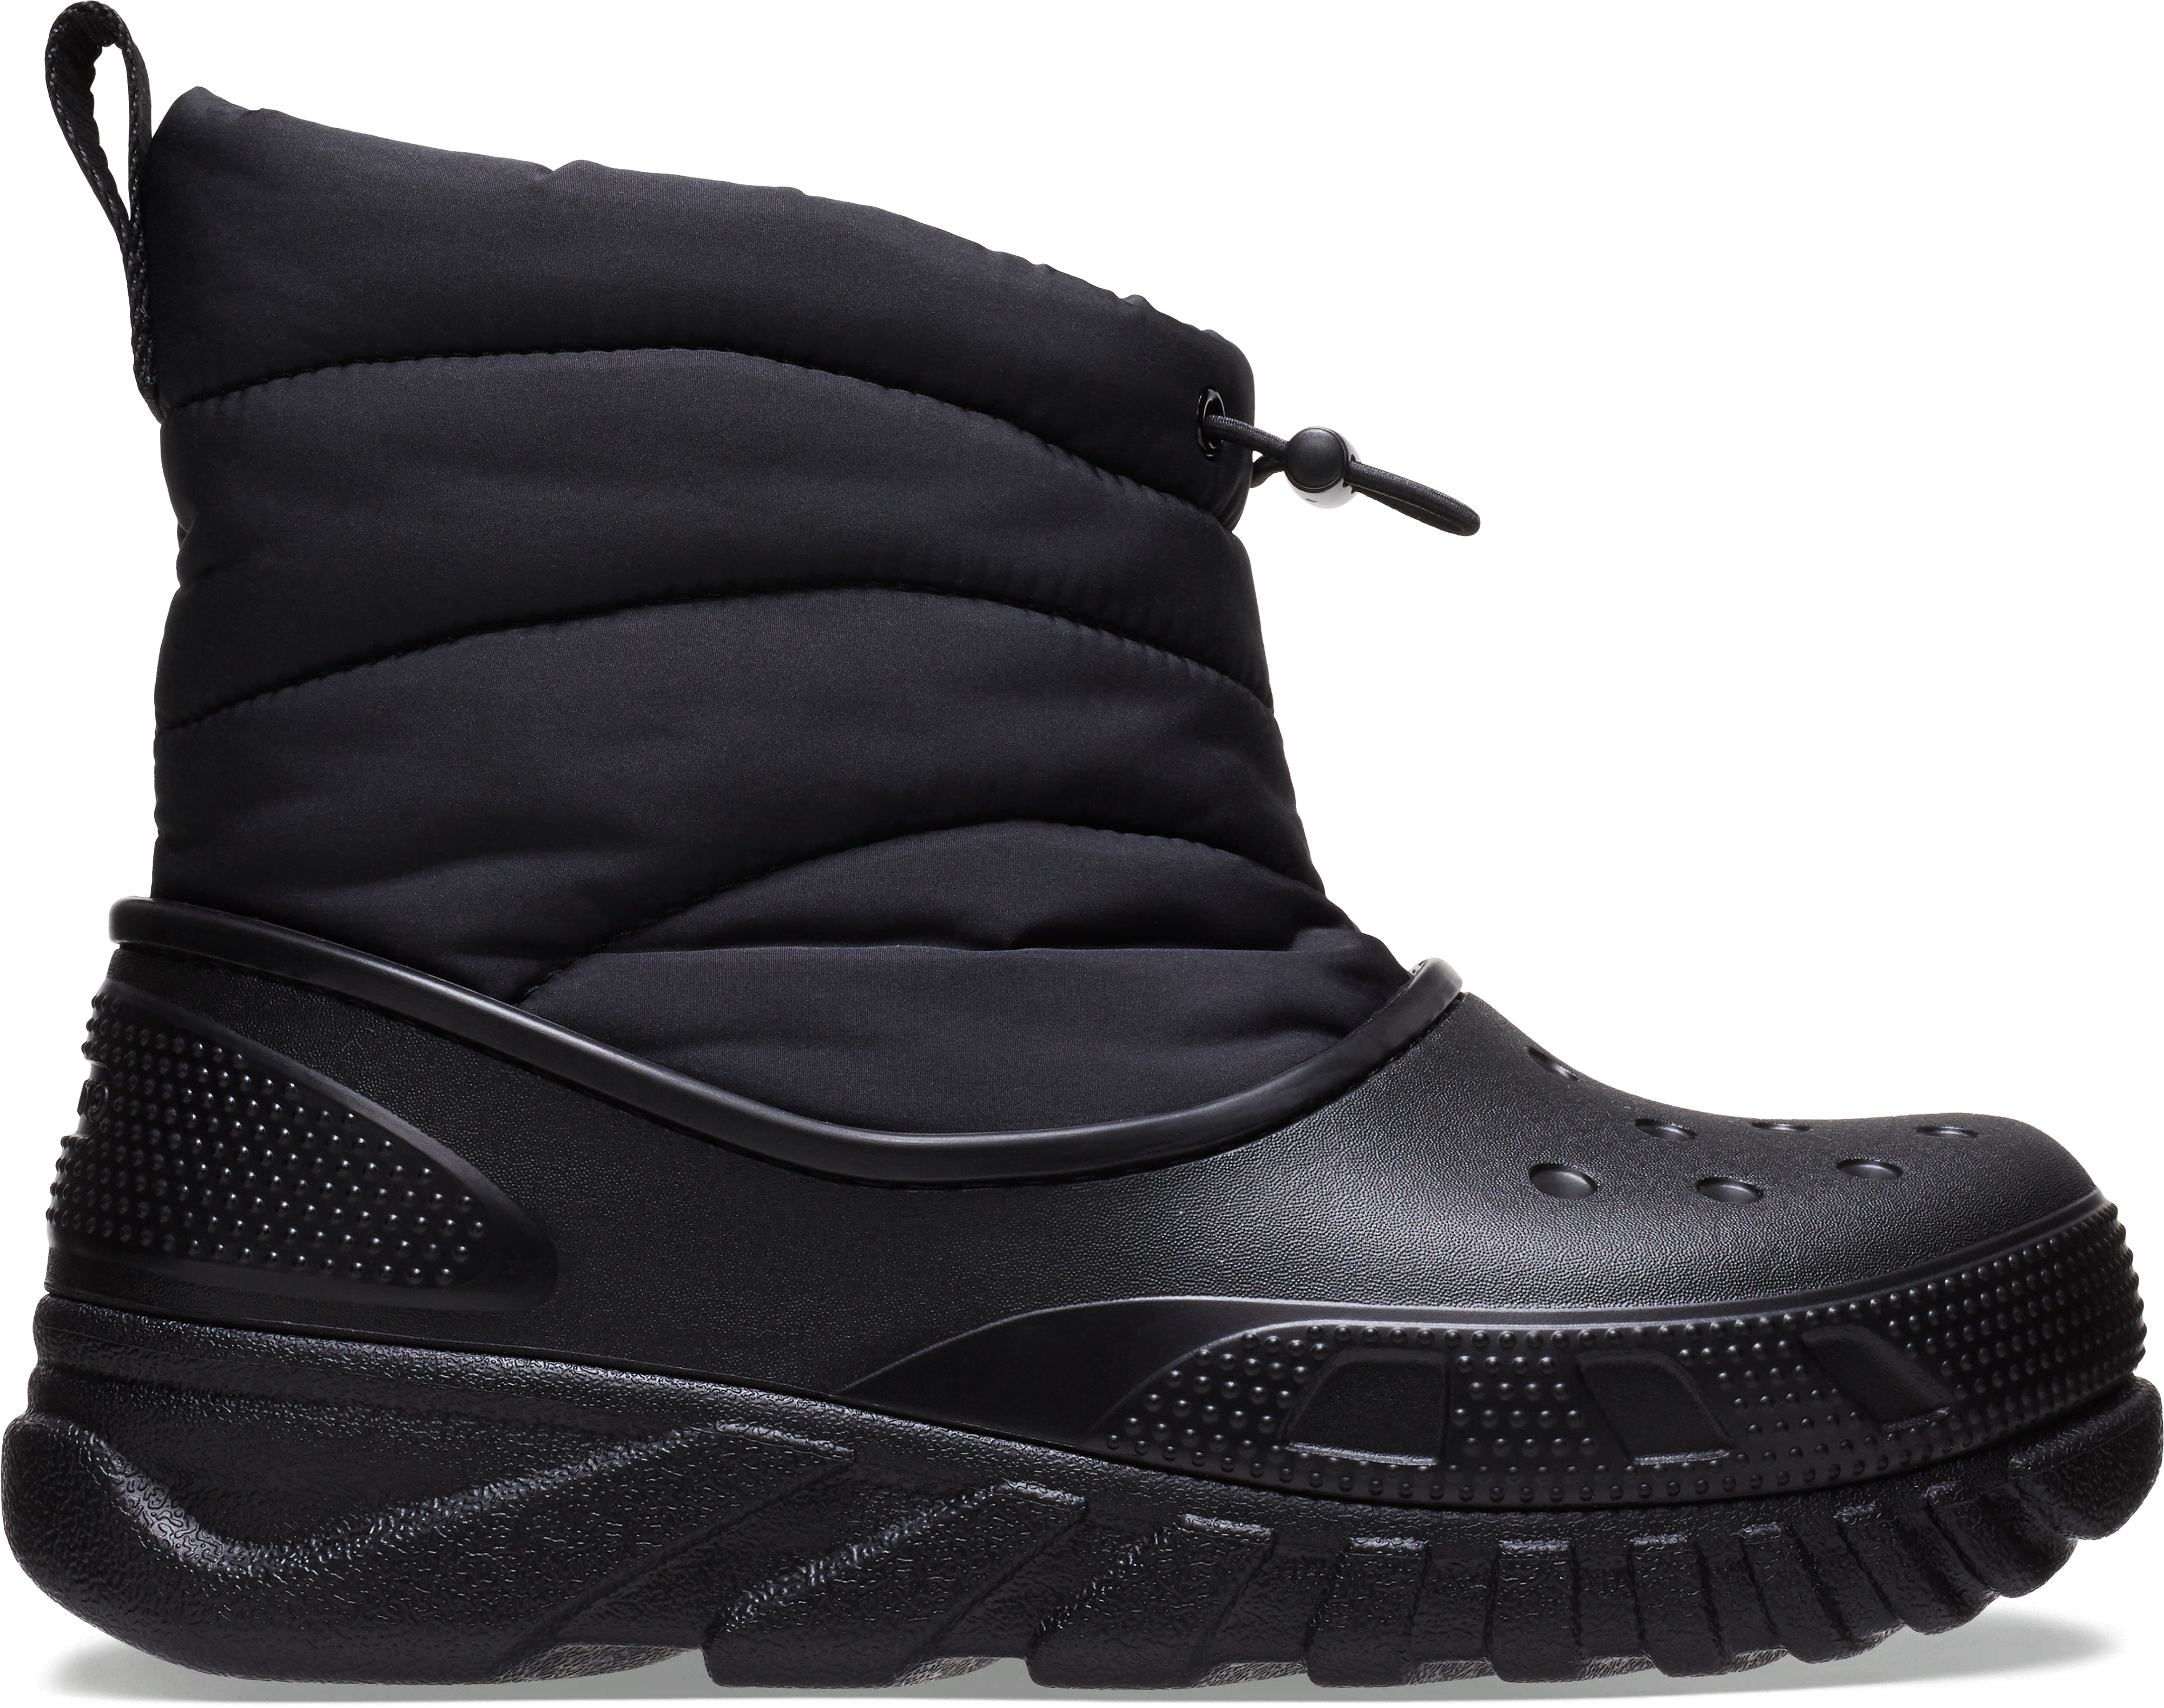 Crocs | Unisex | Duet Max Boot | Boots | Black | W4/M3